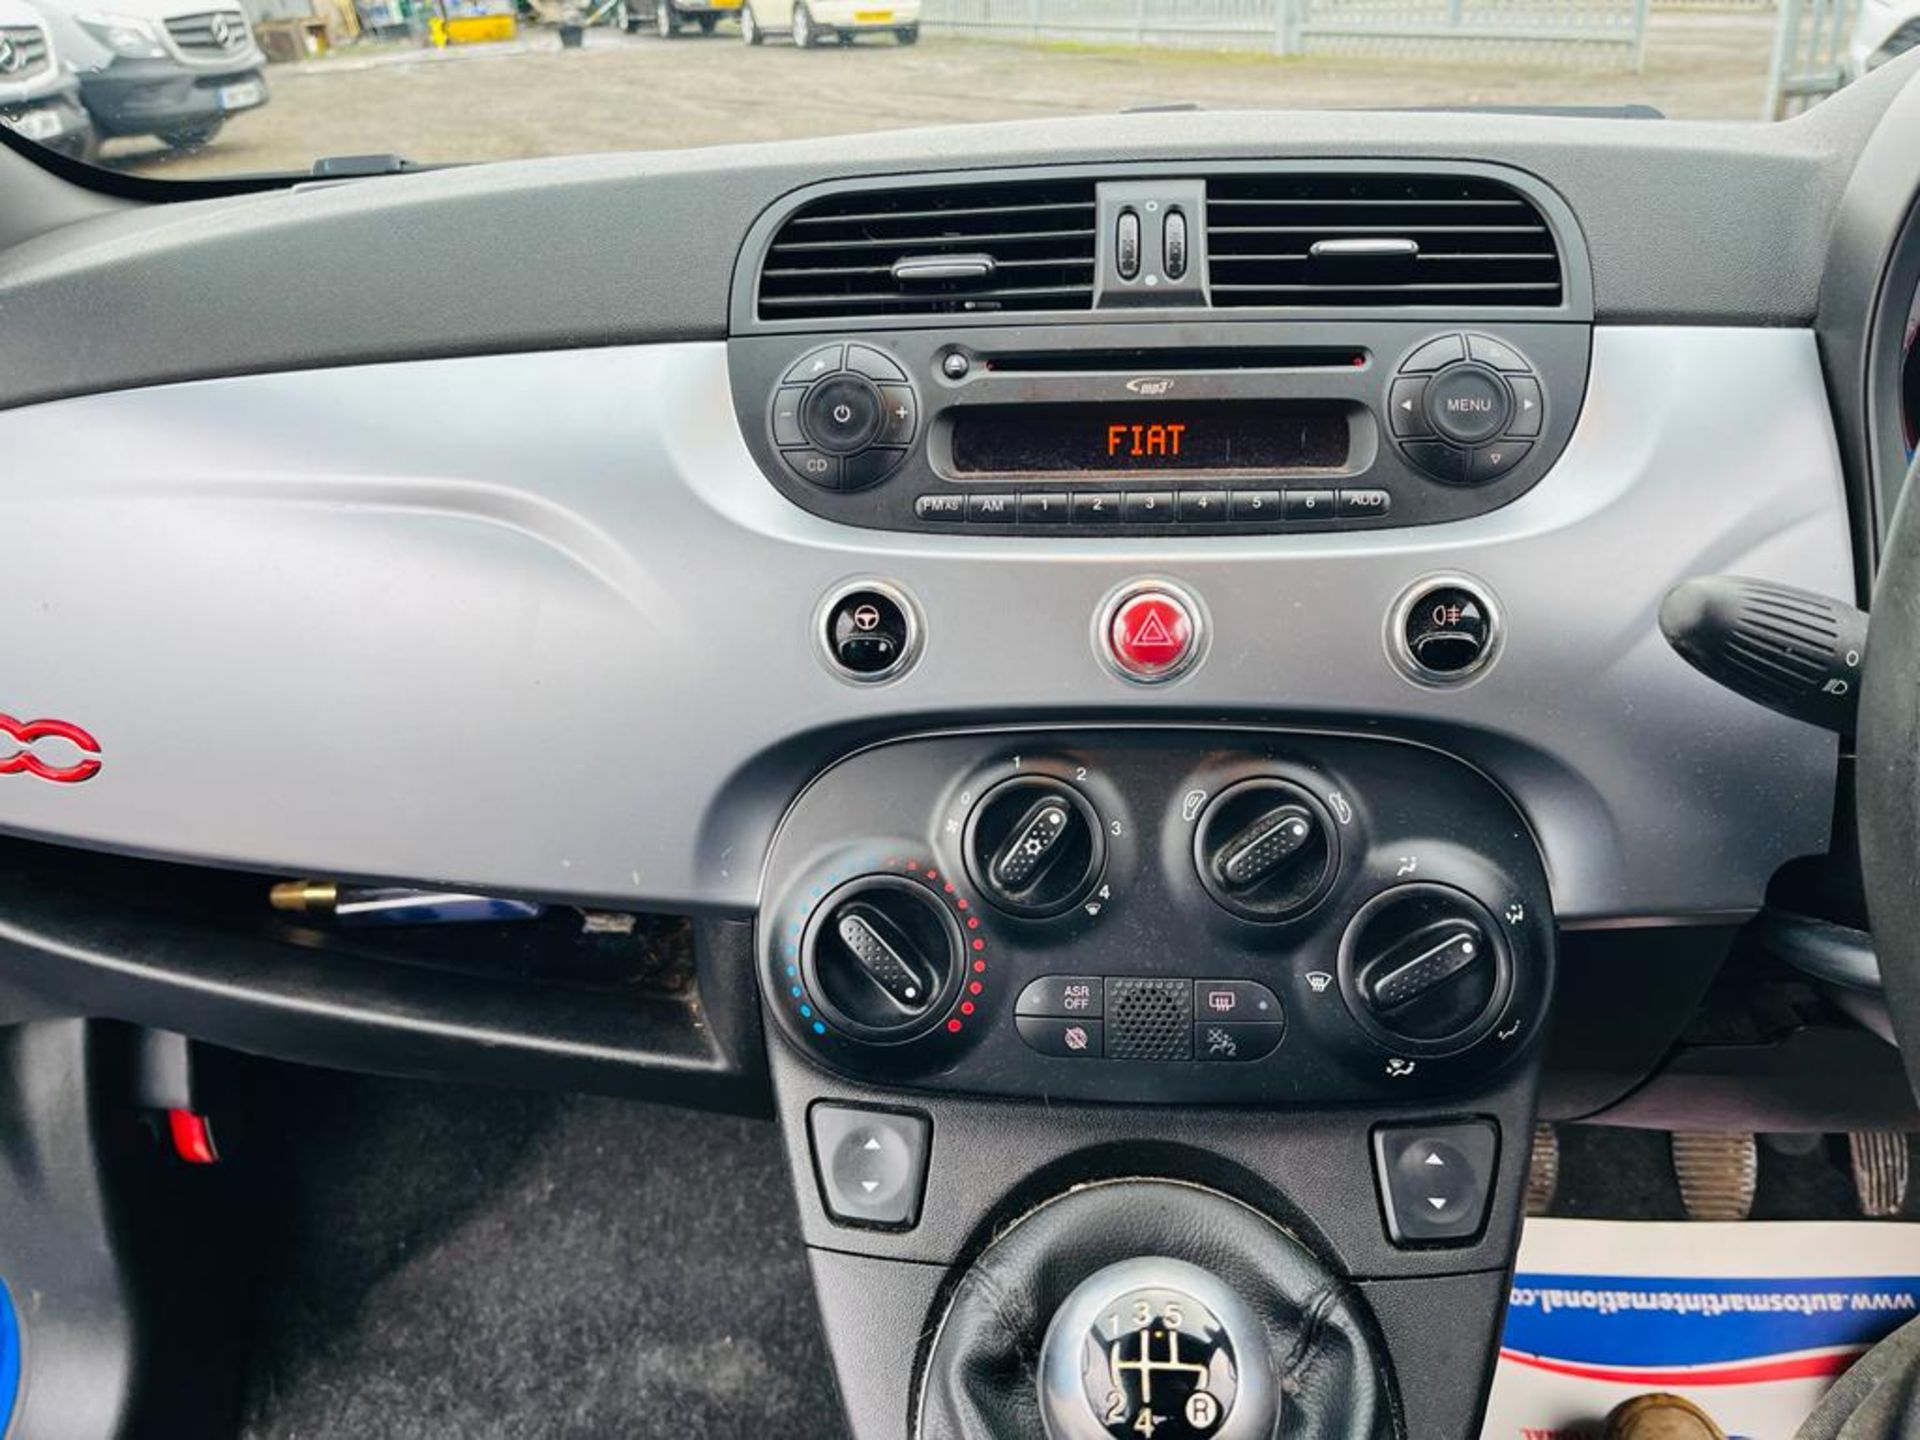 Fiat 500 S 1.2 Petrol 2015 '15 Reg' ULEZ Compliant - Only 64,819 Miles - No Vat - Image 16 of 25